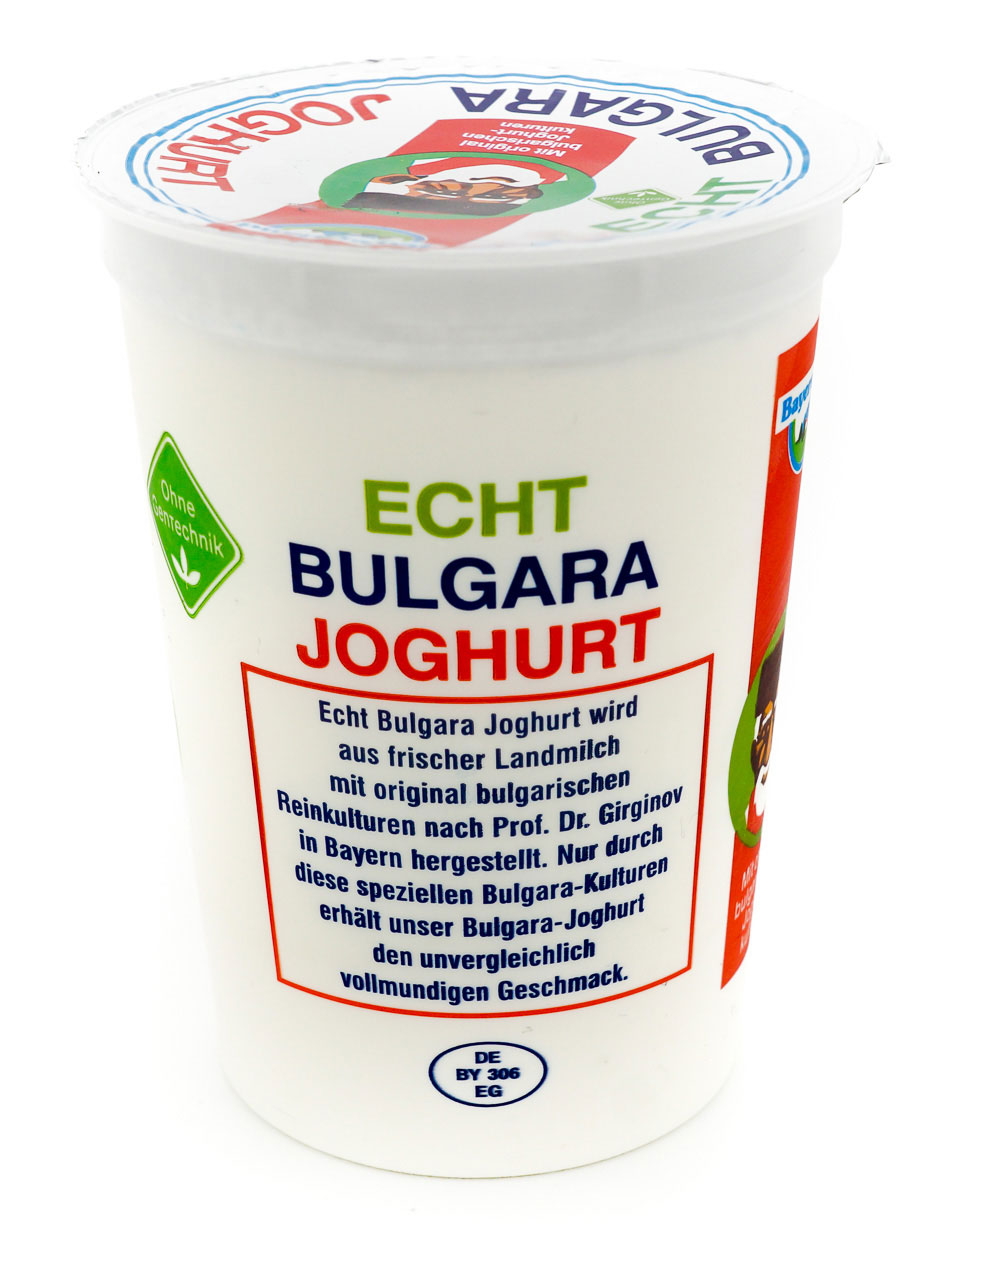 Bulgara Joghurt 500g